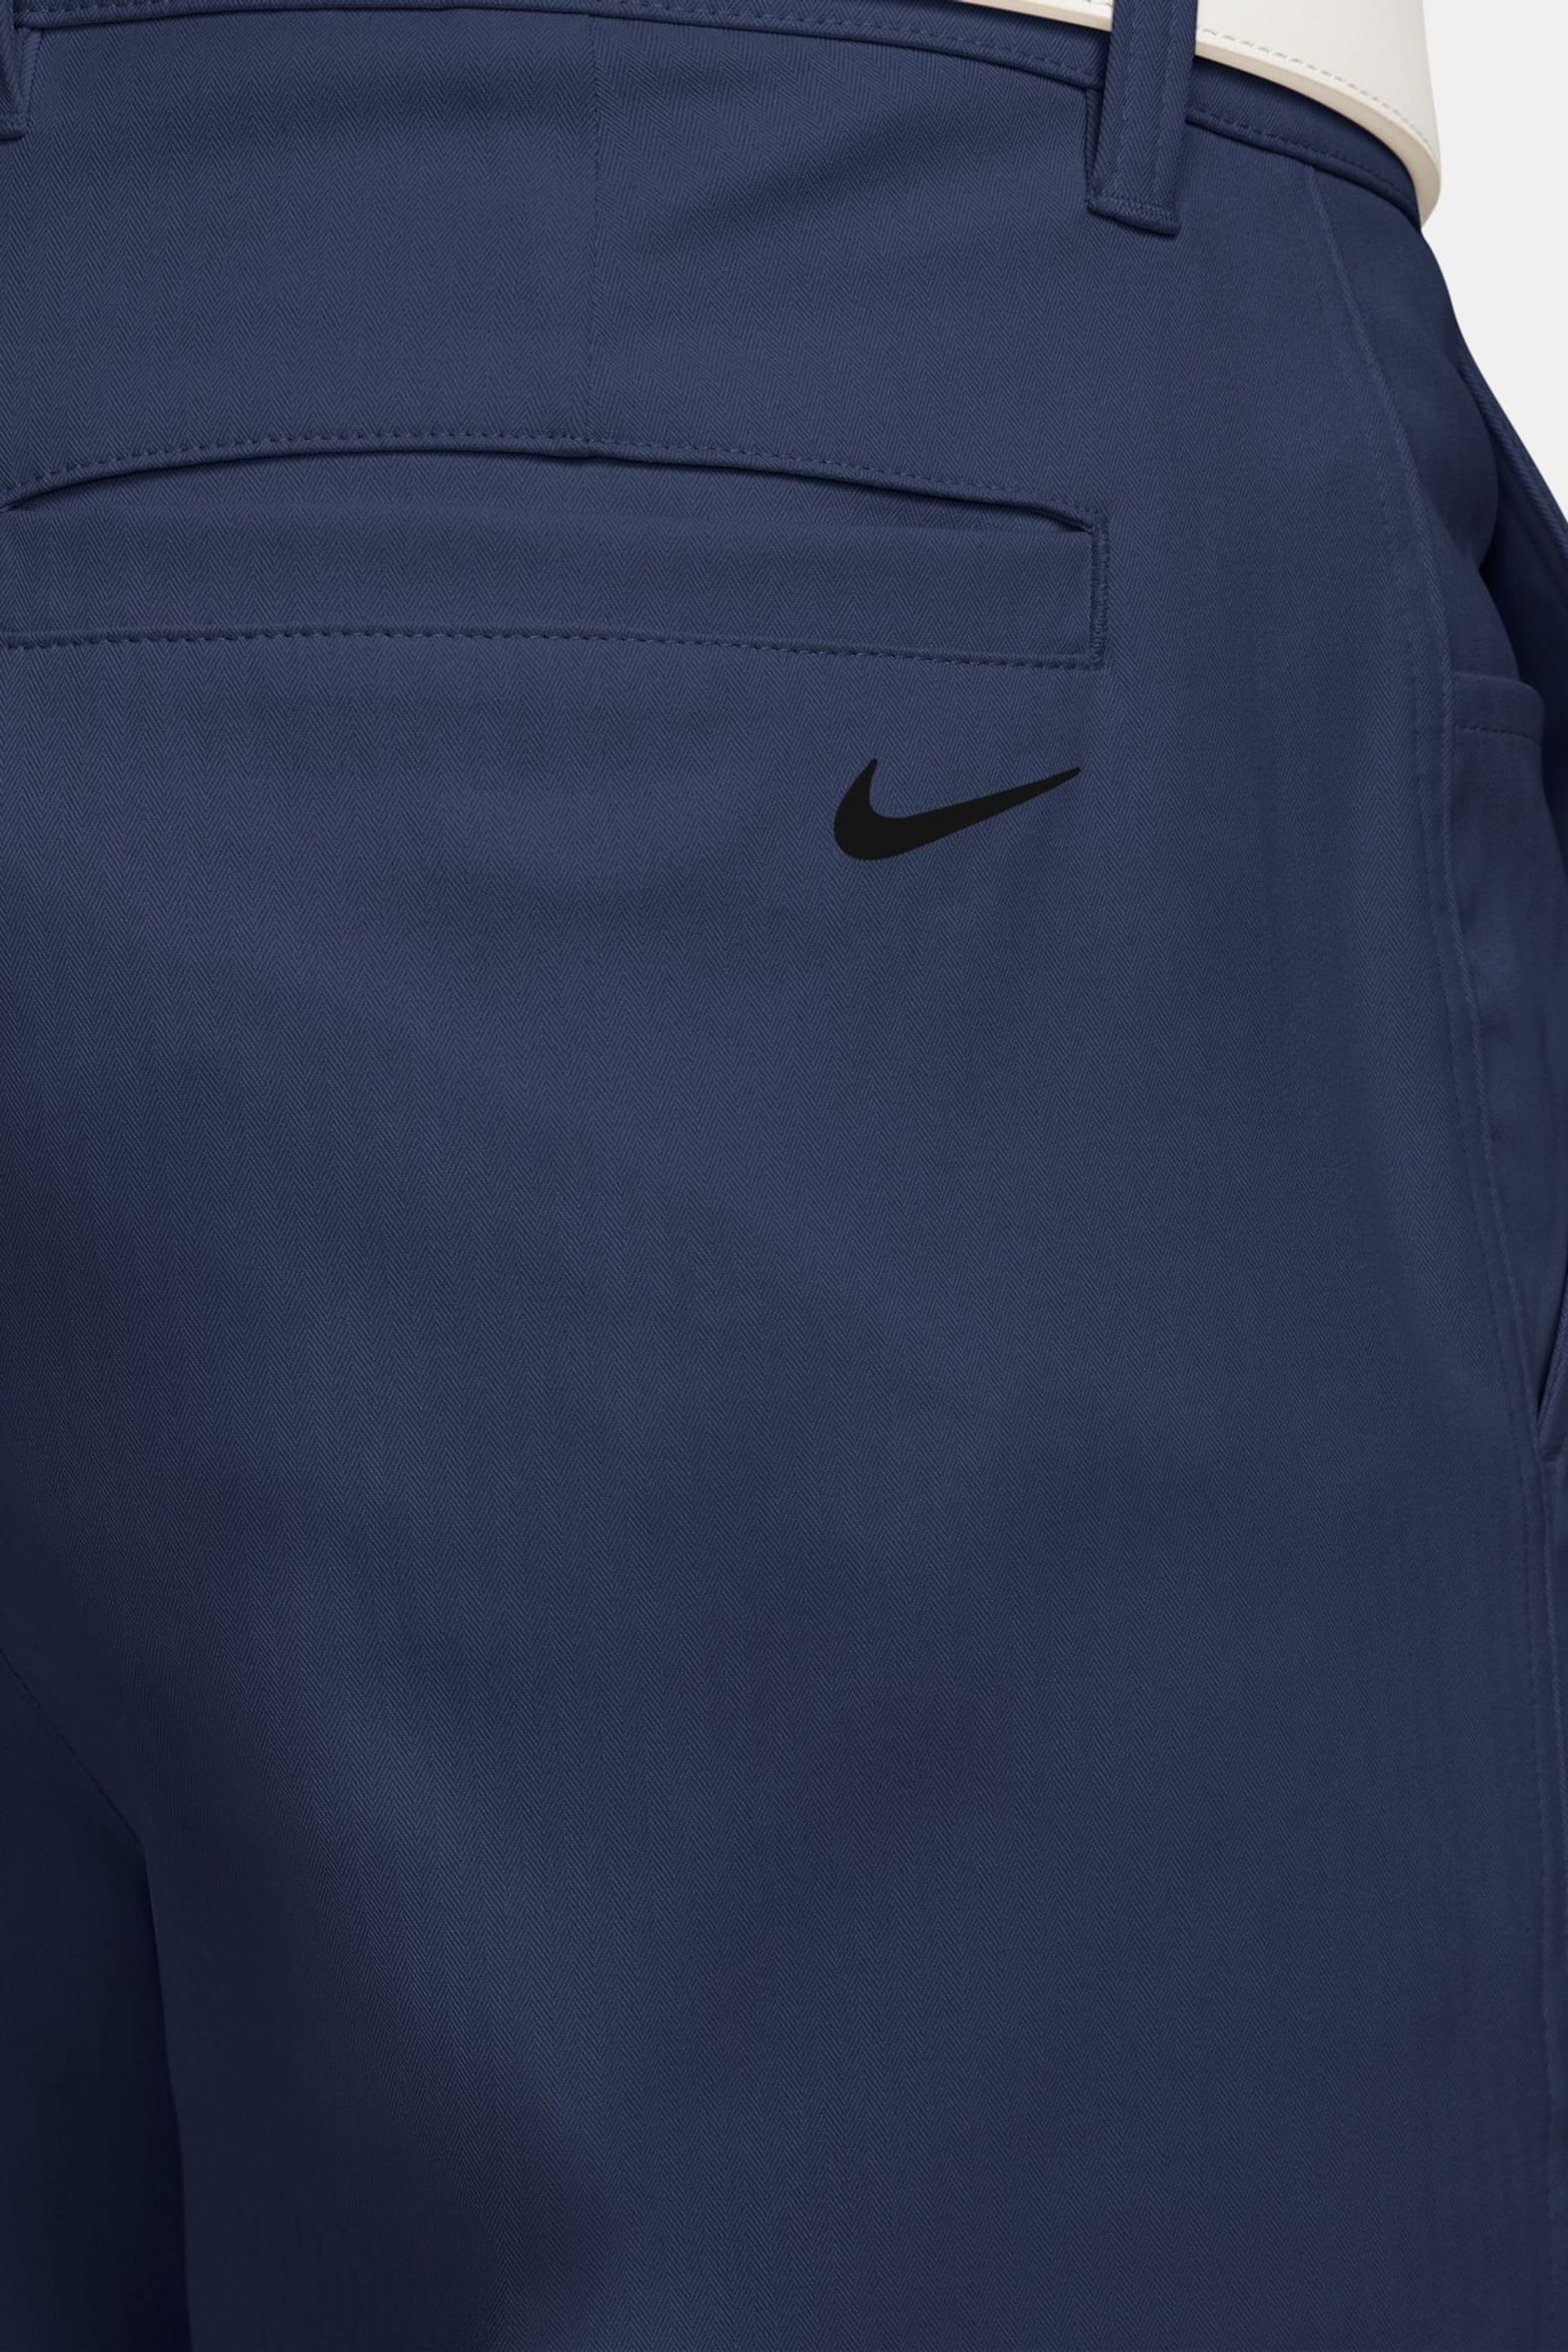 Nike Blue Tour 8 inch Chino Golf Shorts - Image 4 of 9